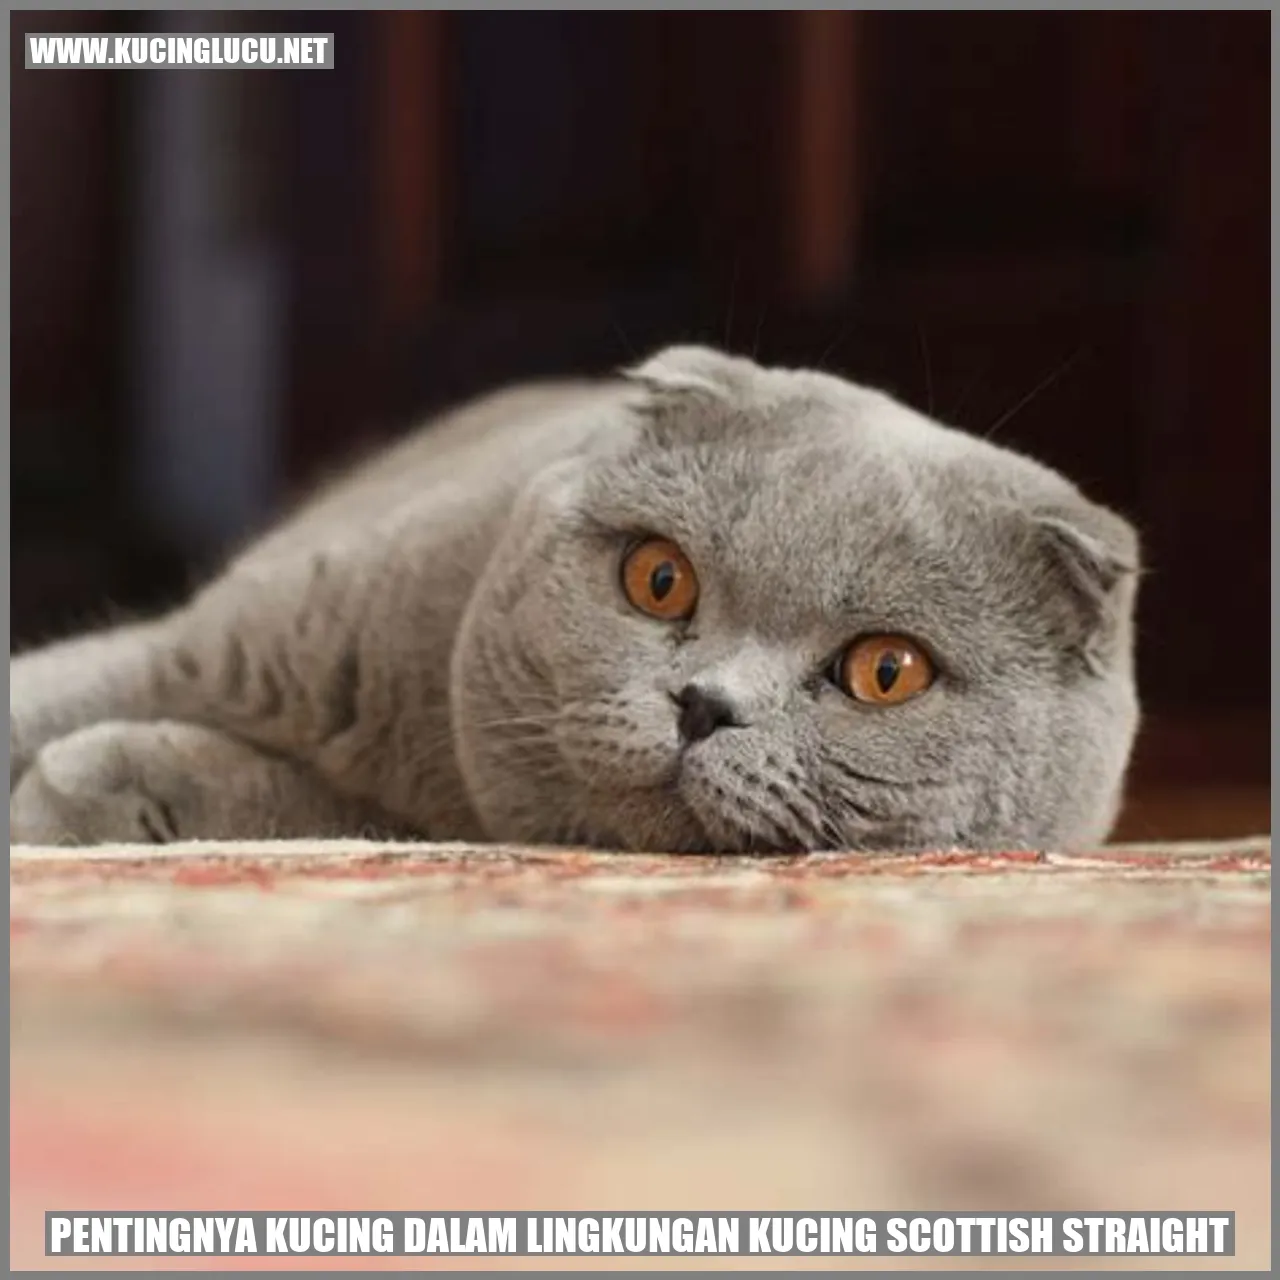 Pentingnya Kucing dalam Lingkungan Kucing Scottish Straight